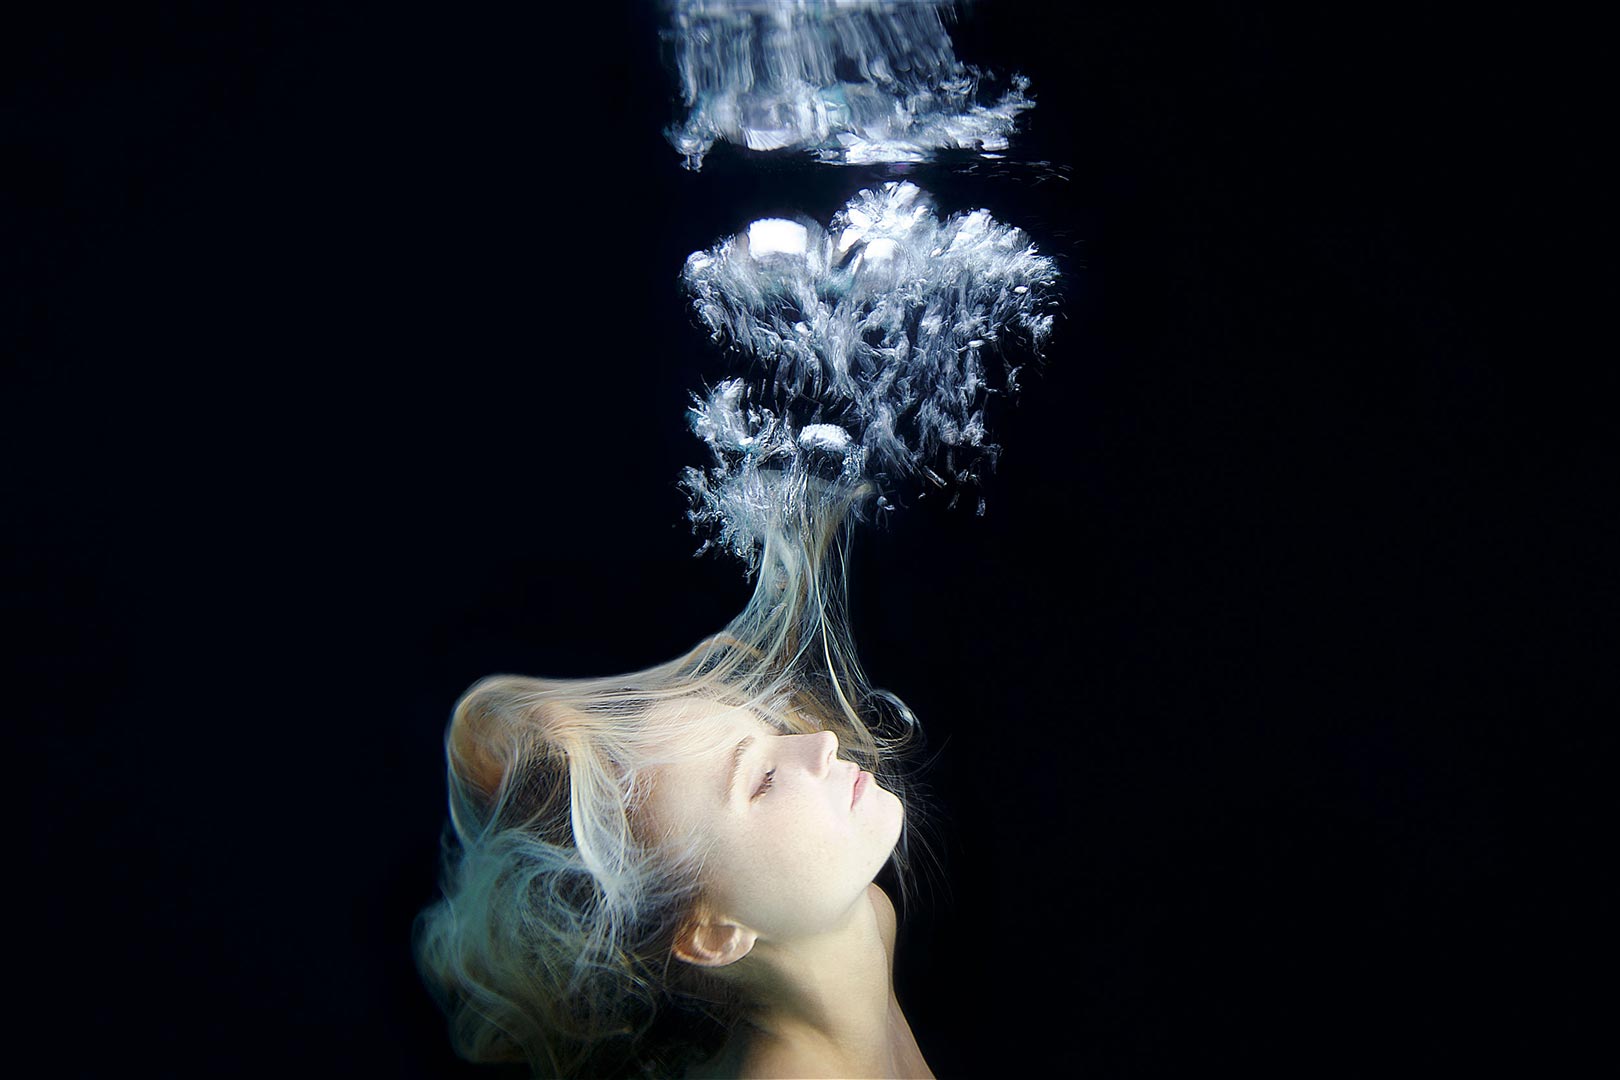  UNDERWATER PHOTOGRAPHY Underwater Portrait of Surfer Alana Blanchard 